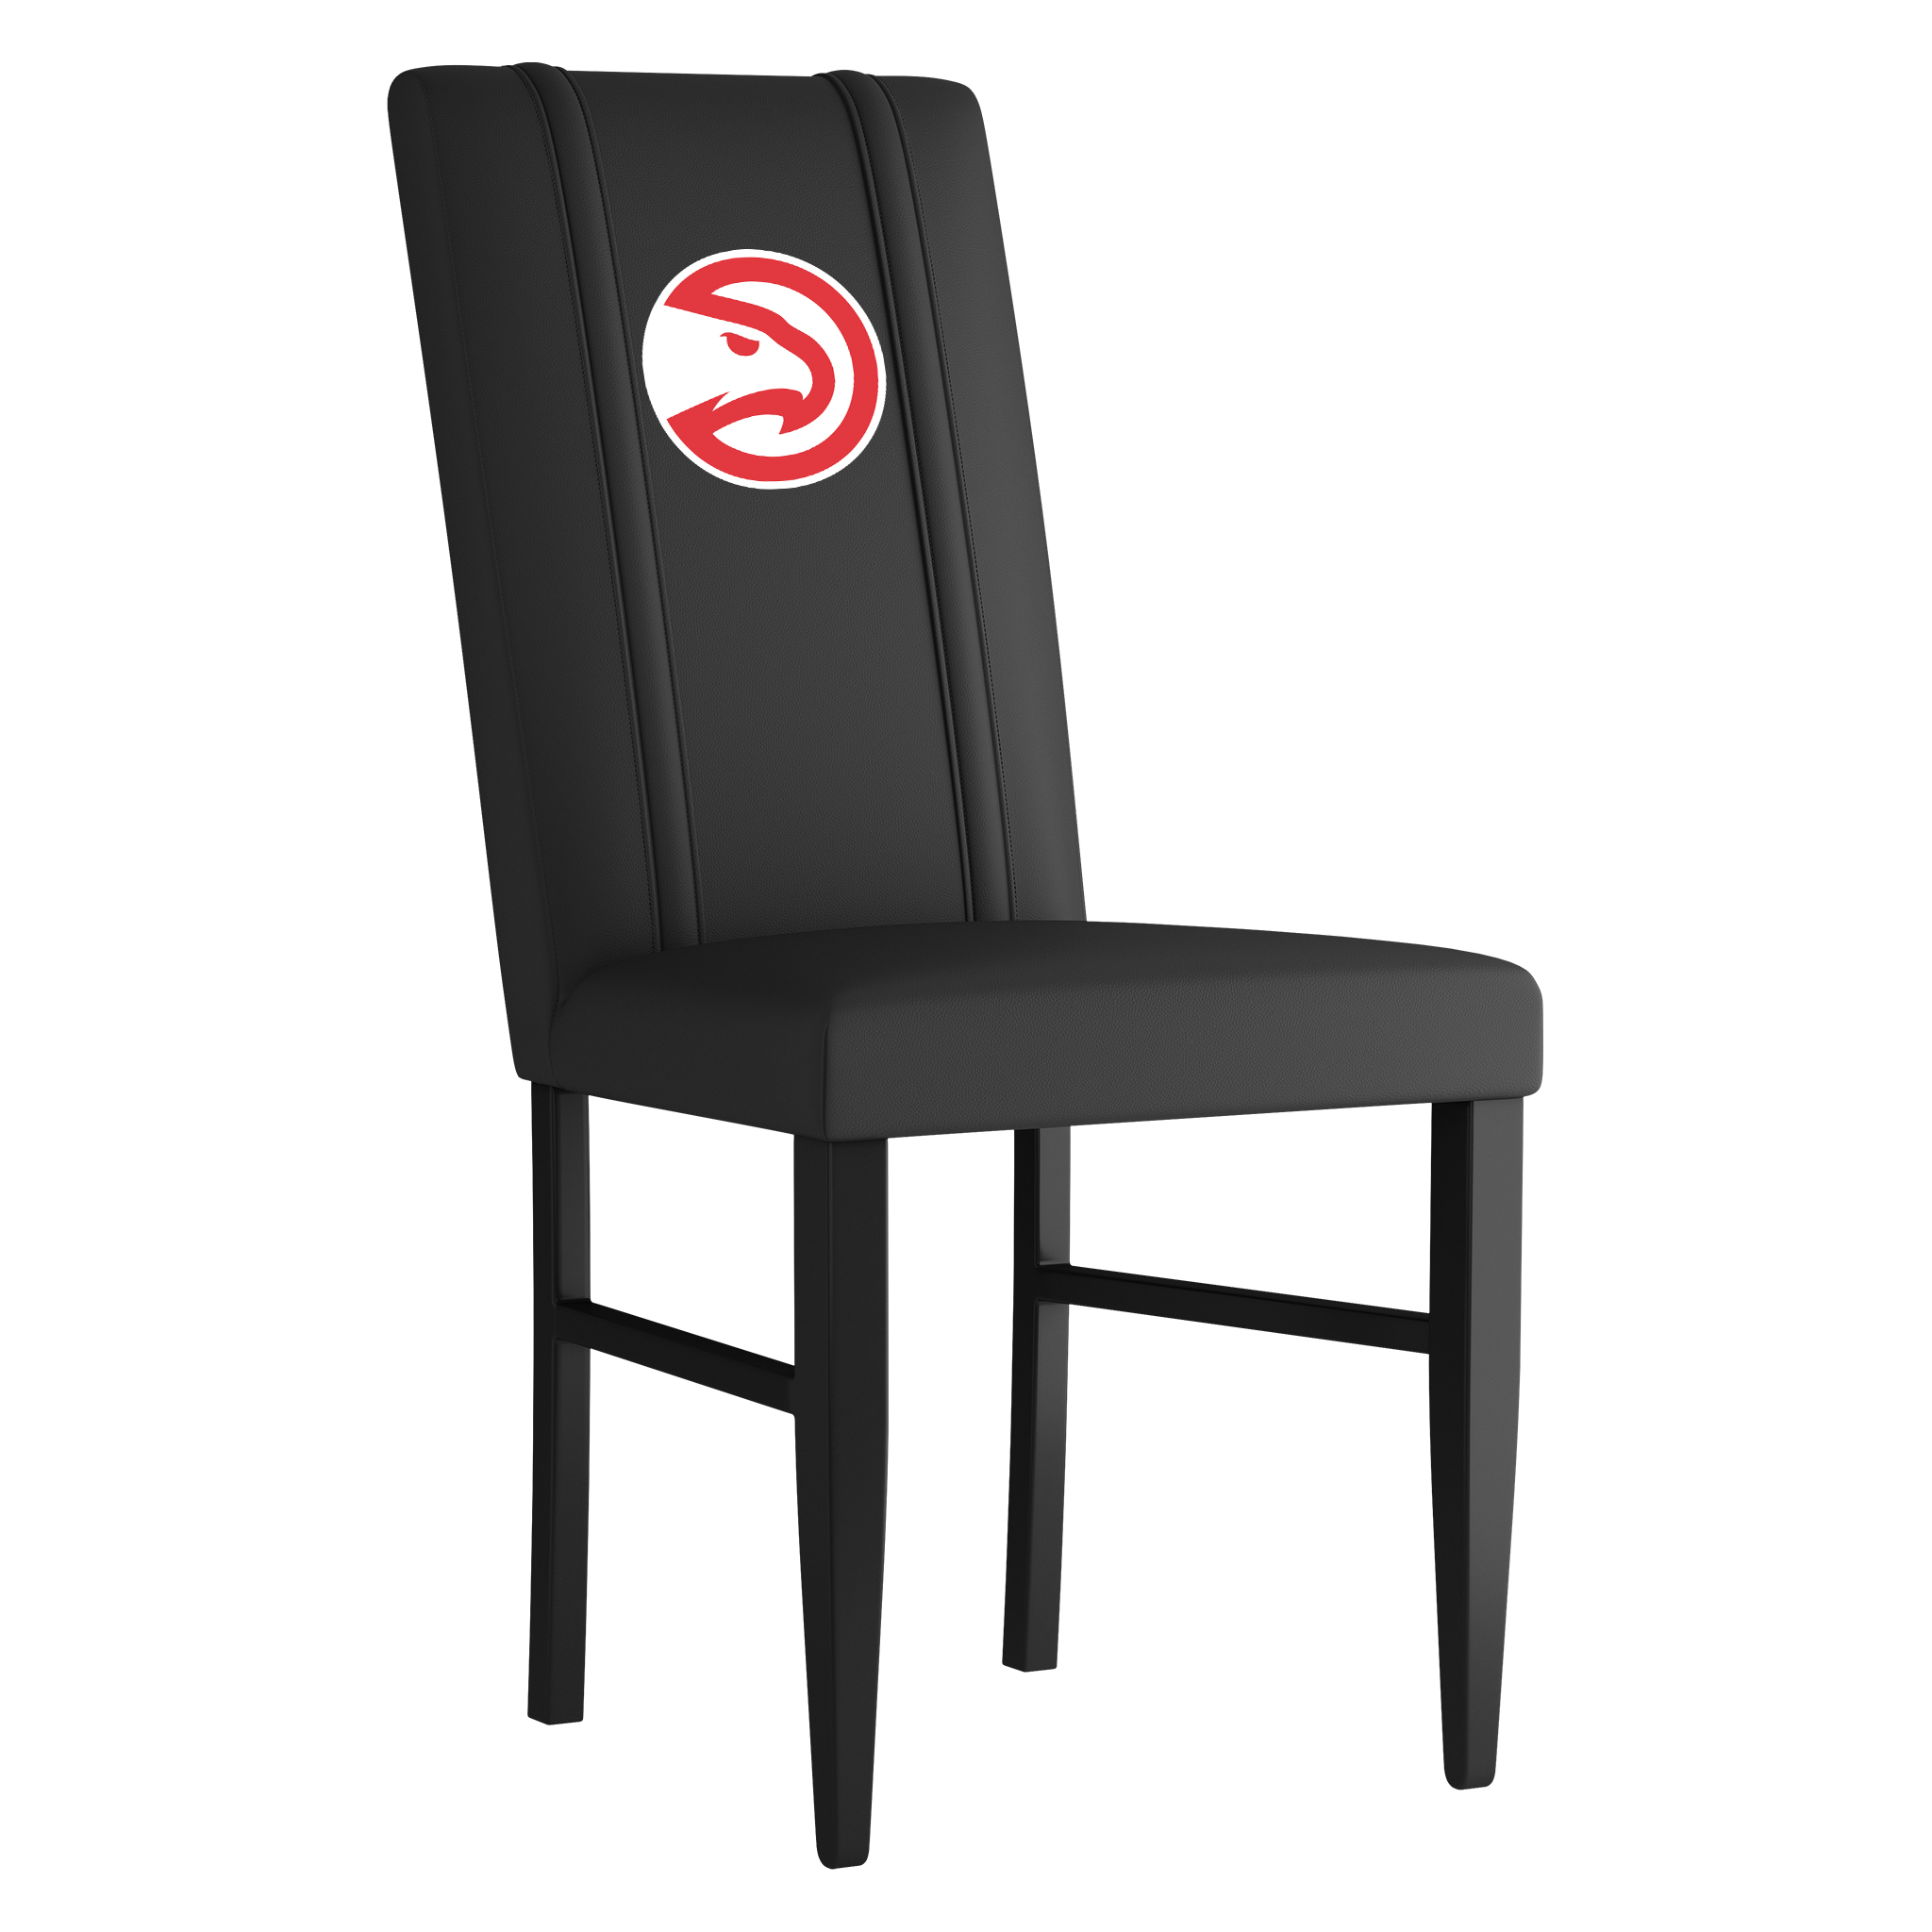 Atlanta Hawks Side Chair 2000 With Atlanta Hawks Logo